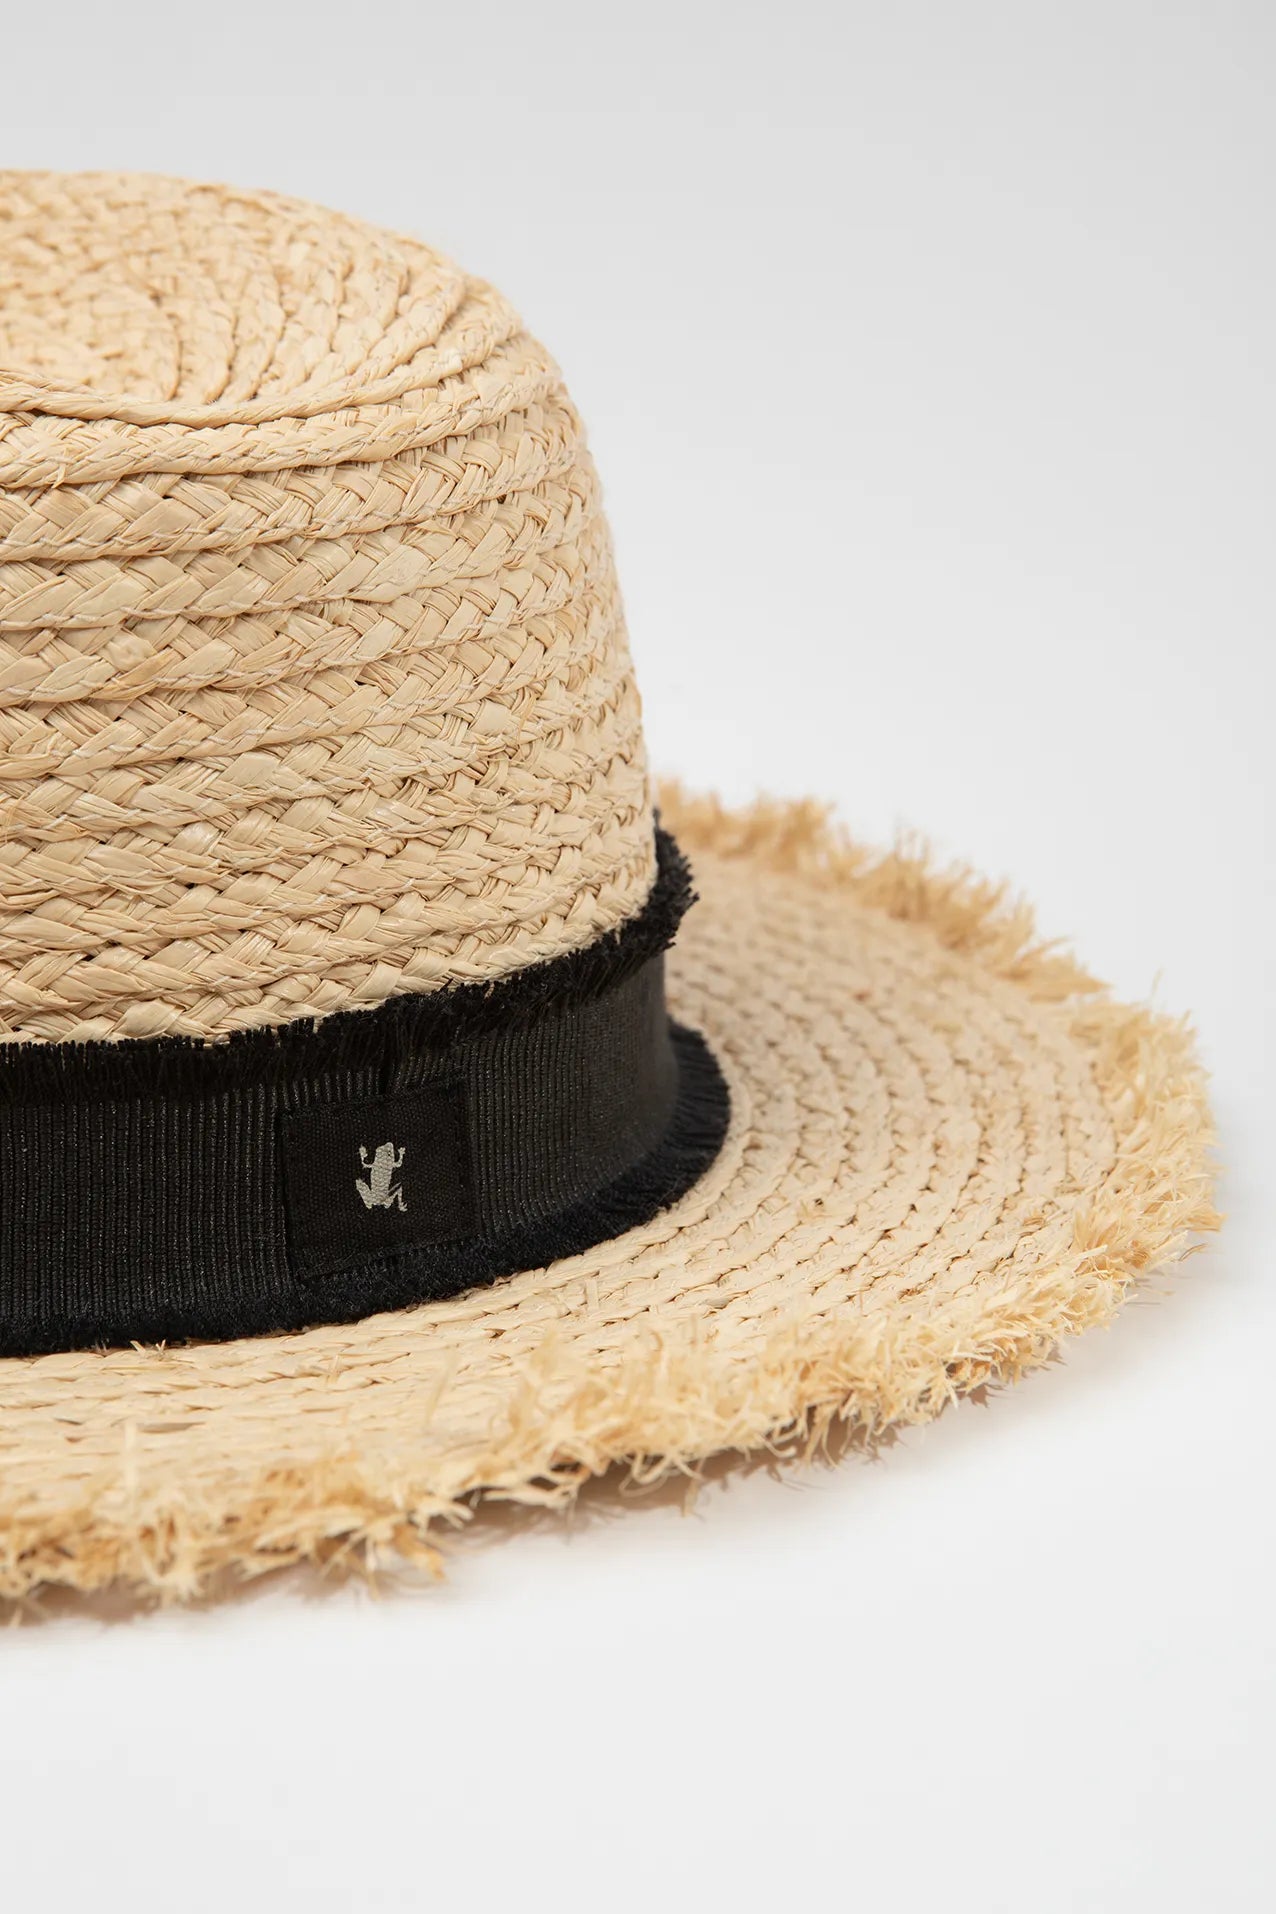 Sombrero playa natural rafia